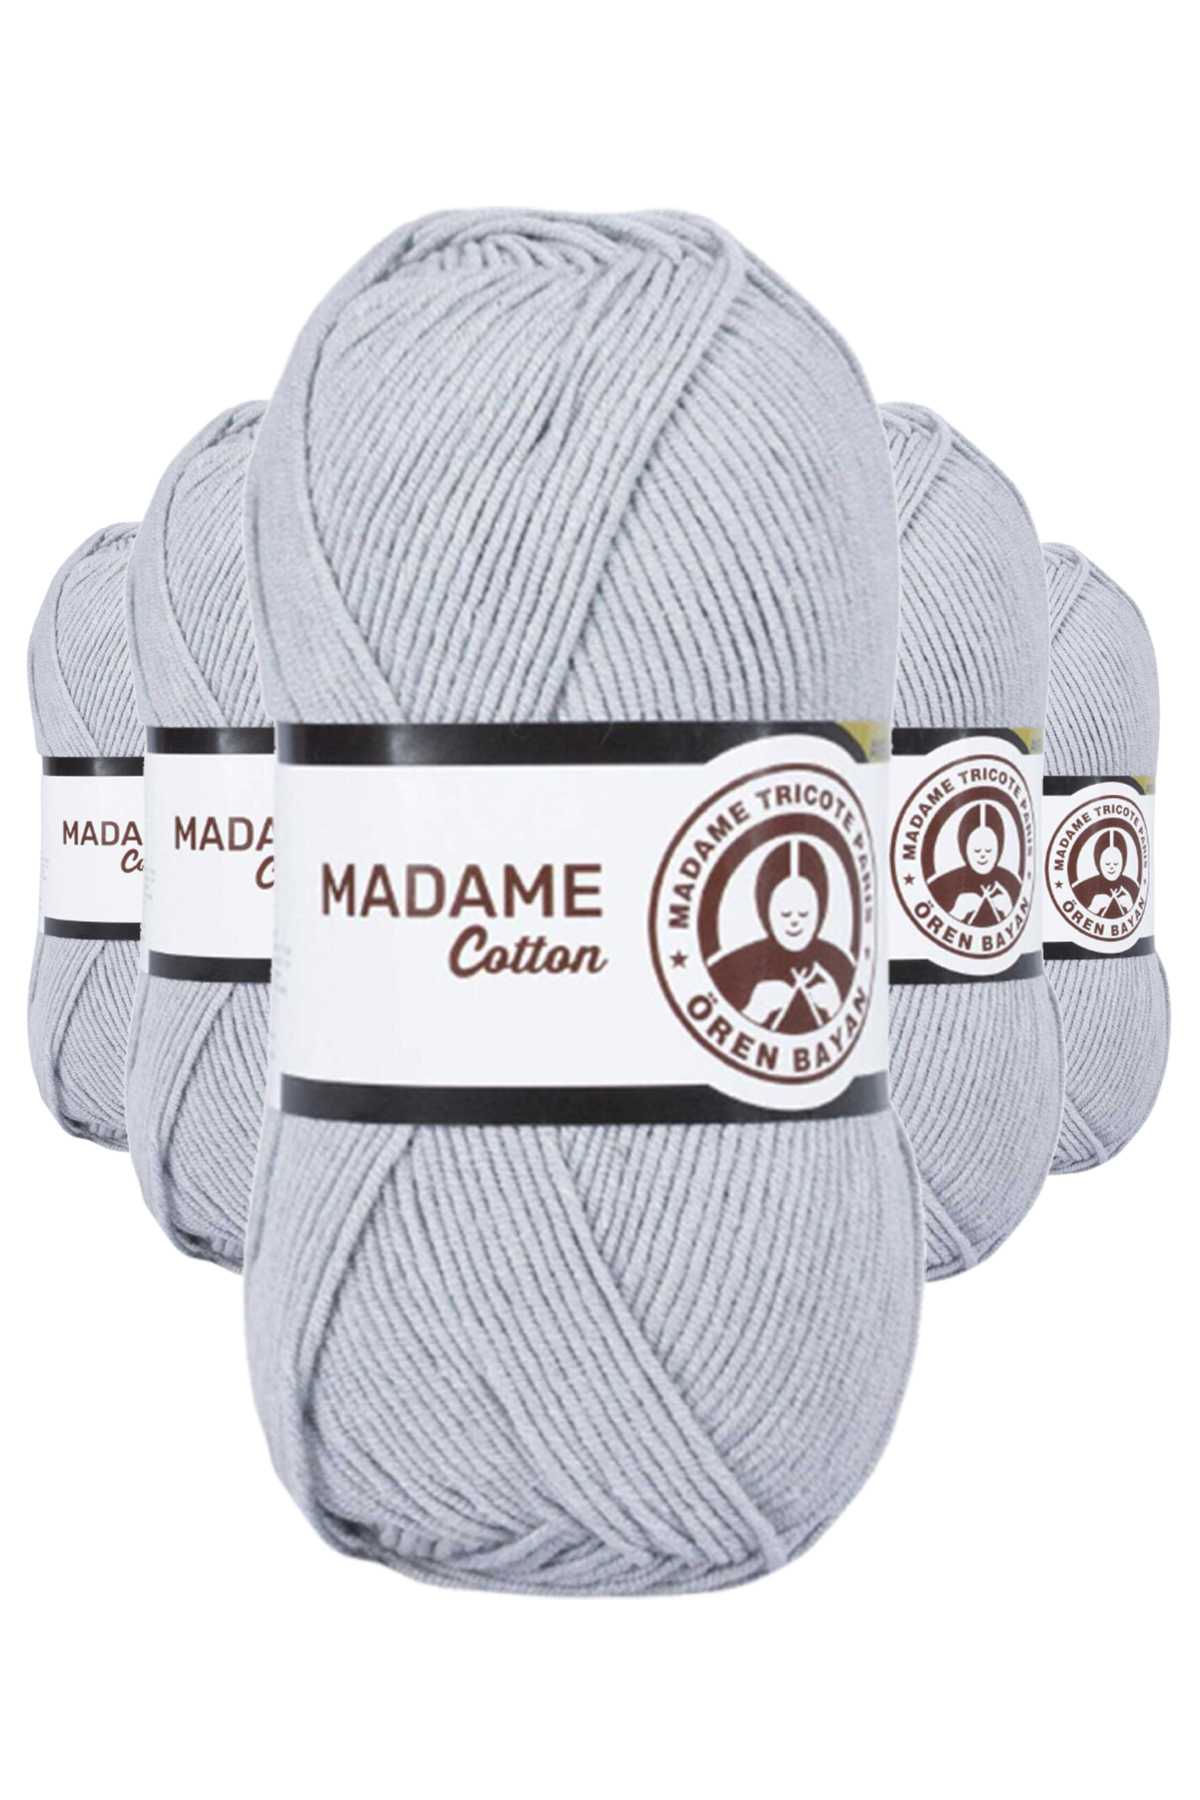 5 Adet Madame Cotton El Örgü İpi Yünü 100 gr 001 Gri